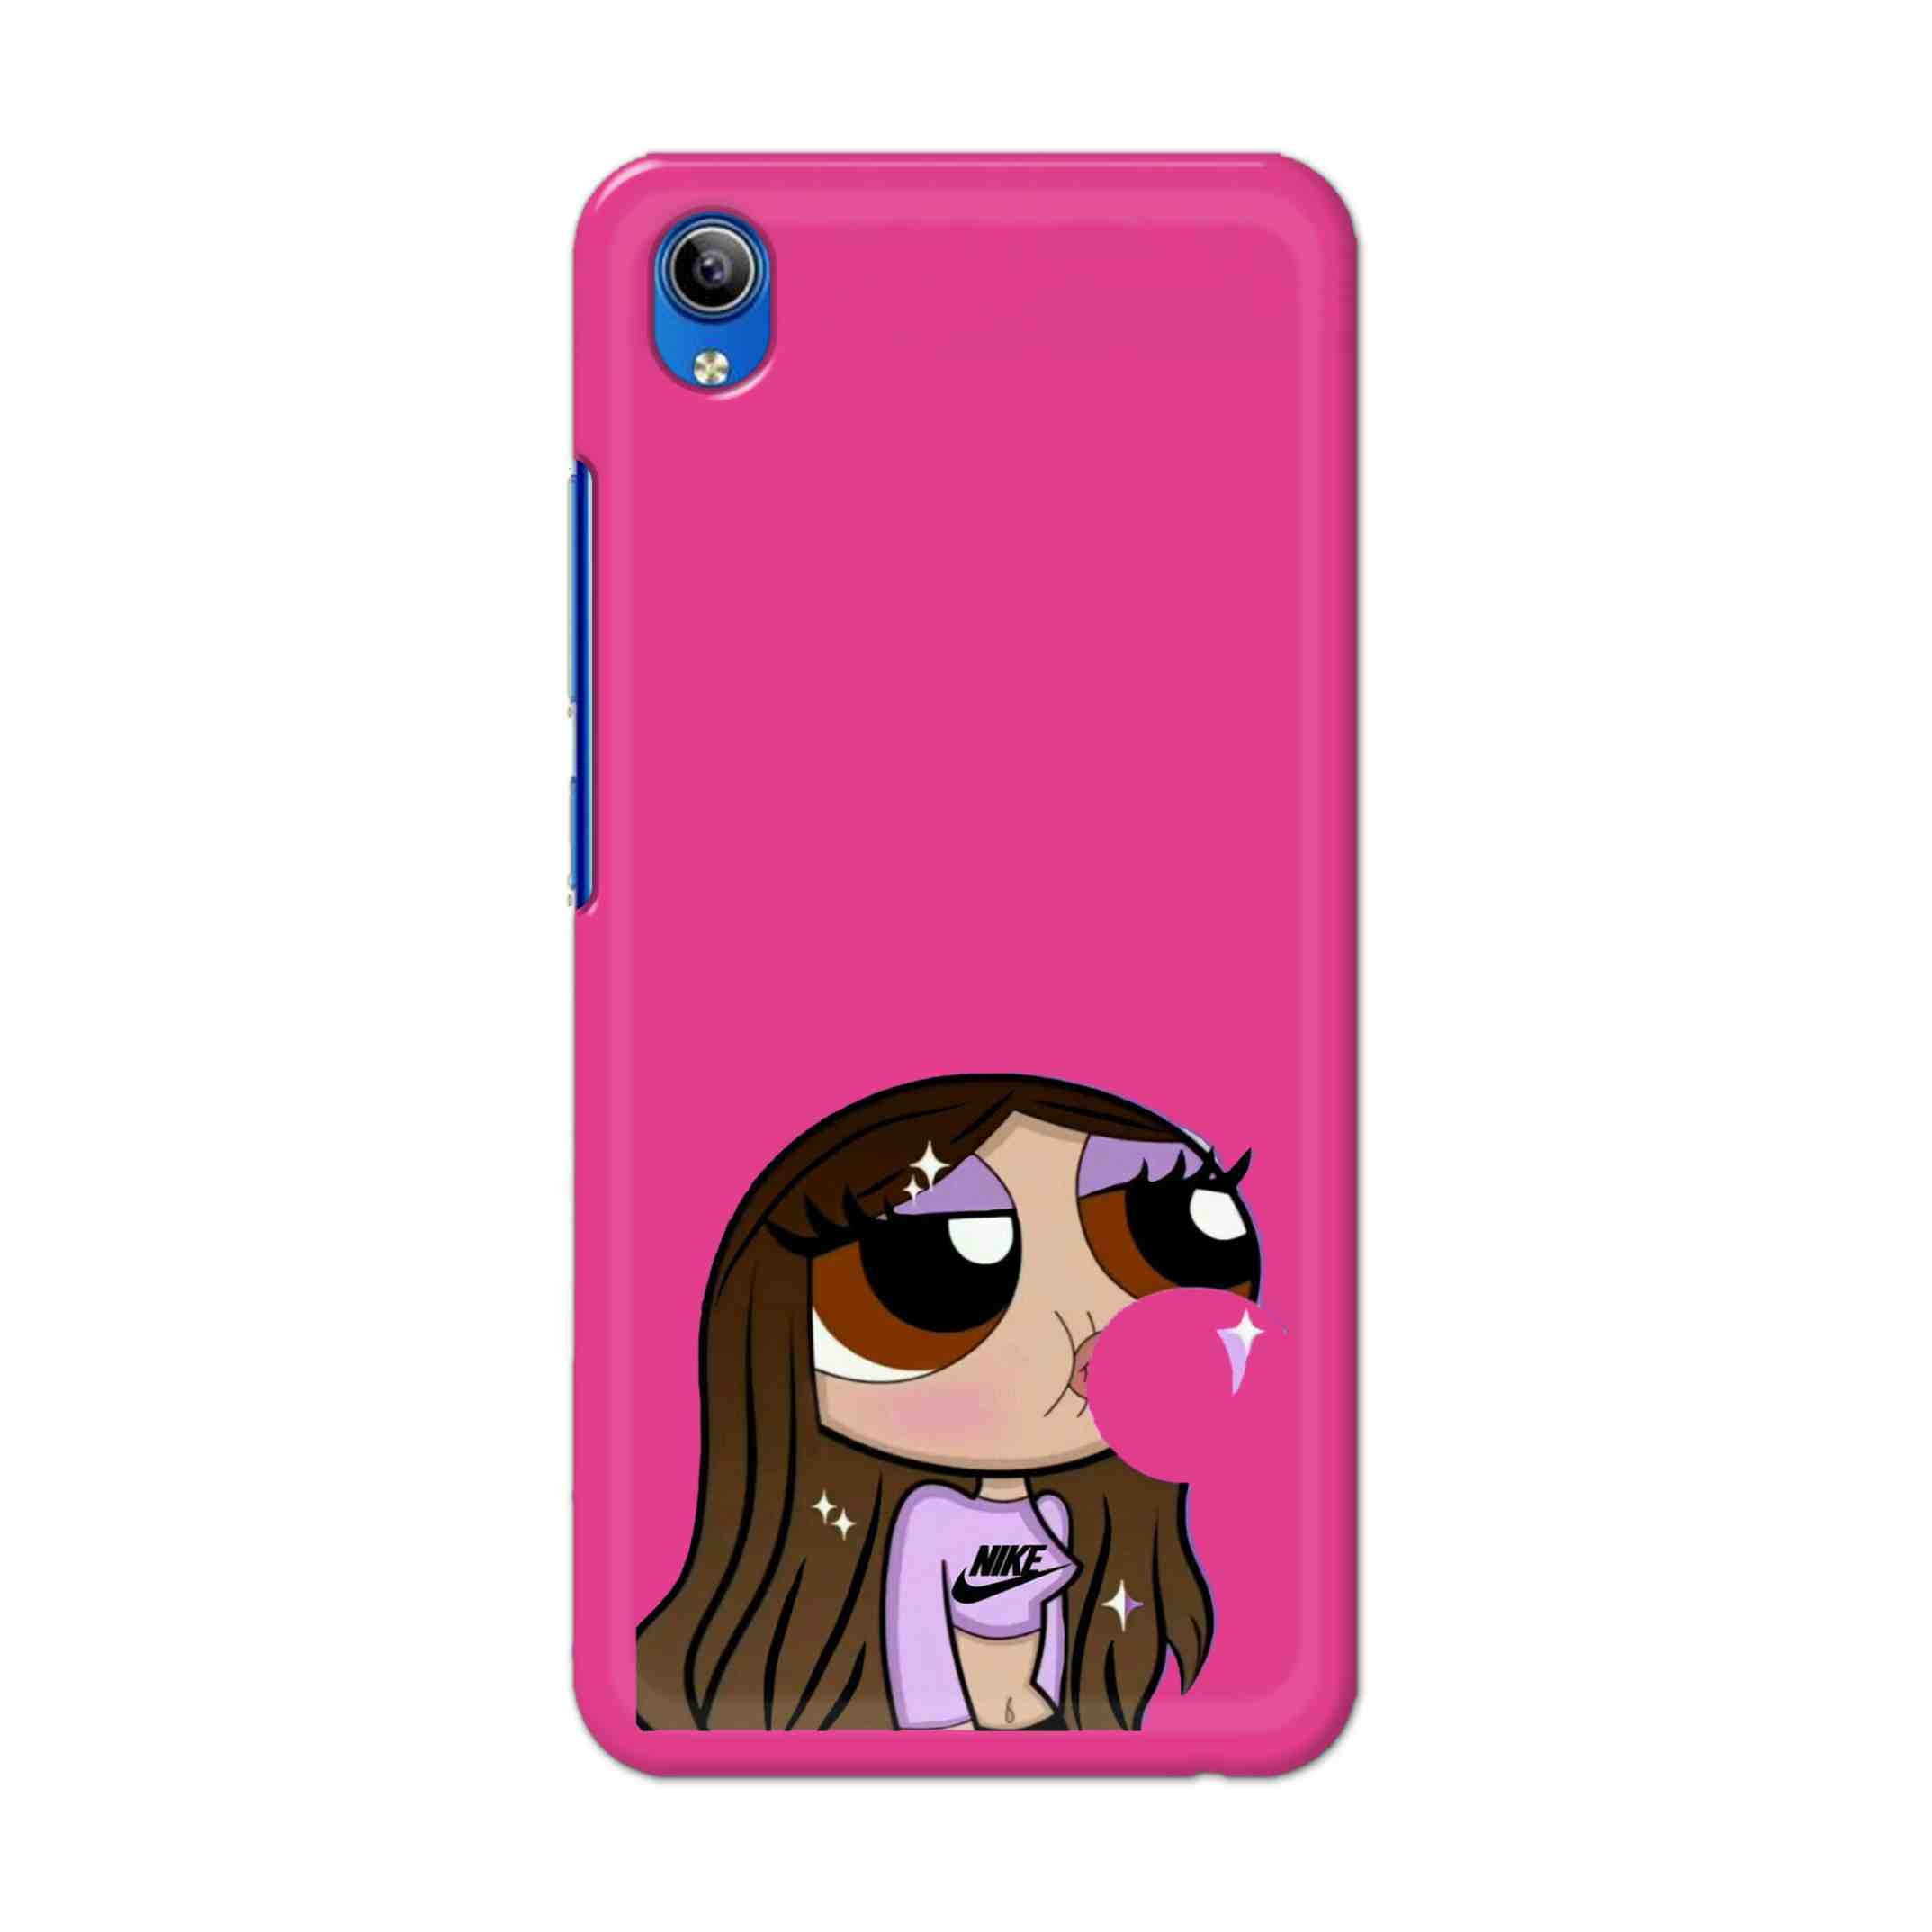 Buy Bubble Girl Hard Back Mobile Phone Case Cover For Vivo Y91i Online